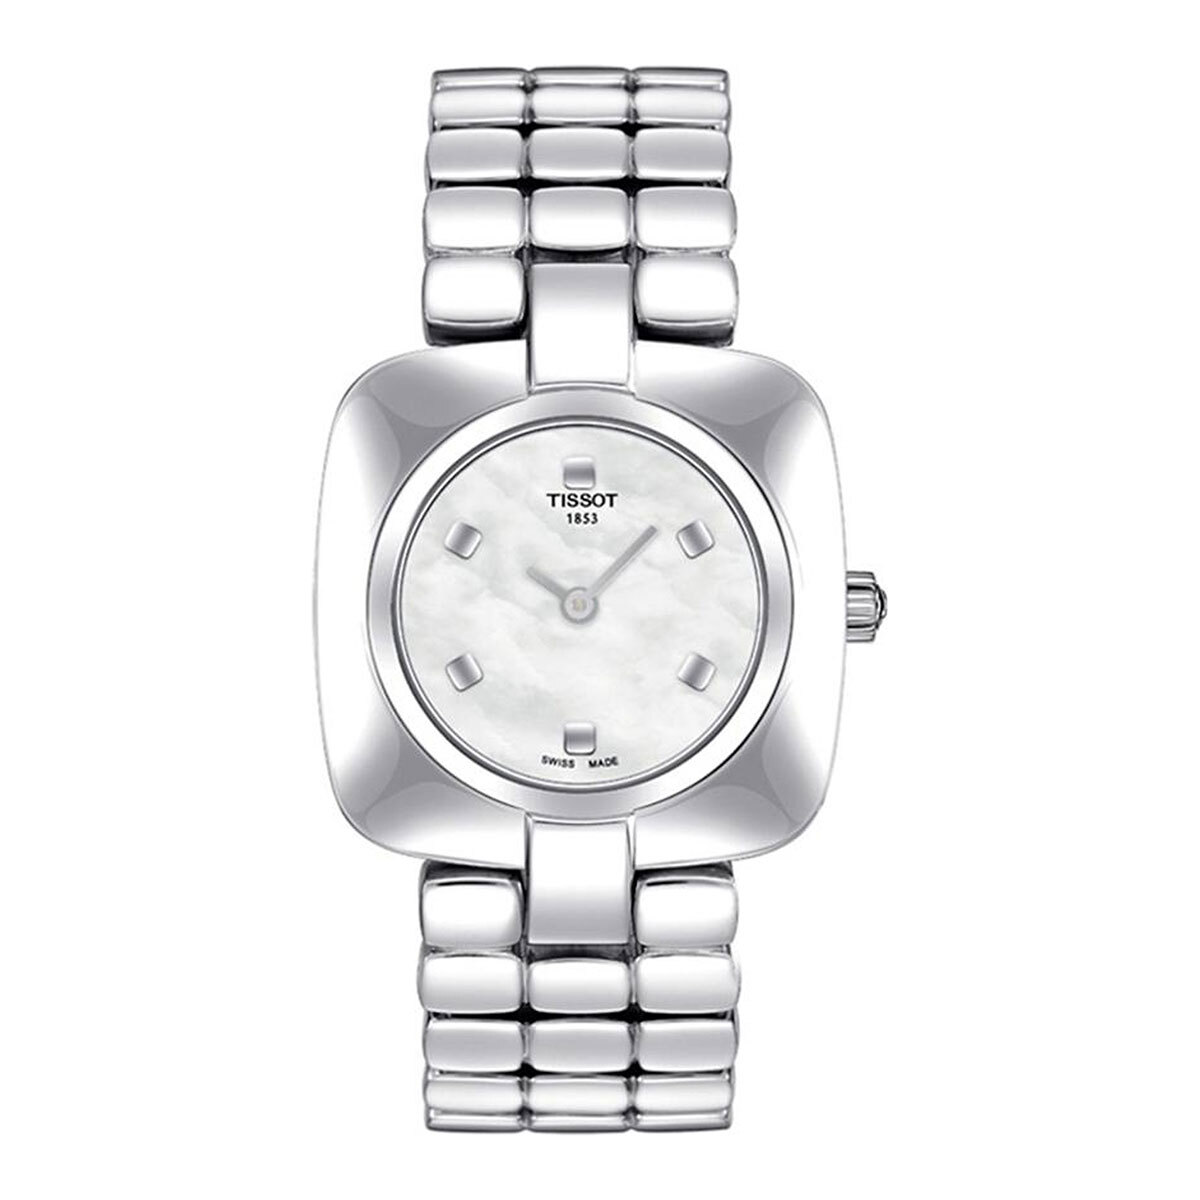 Đồng hồ nữ Tissot T020.309.11.111.00